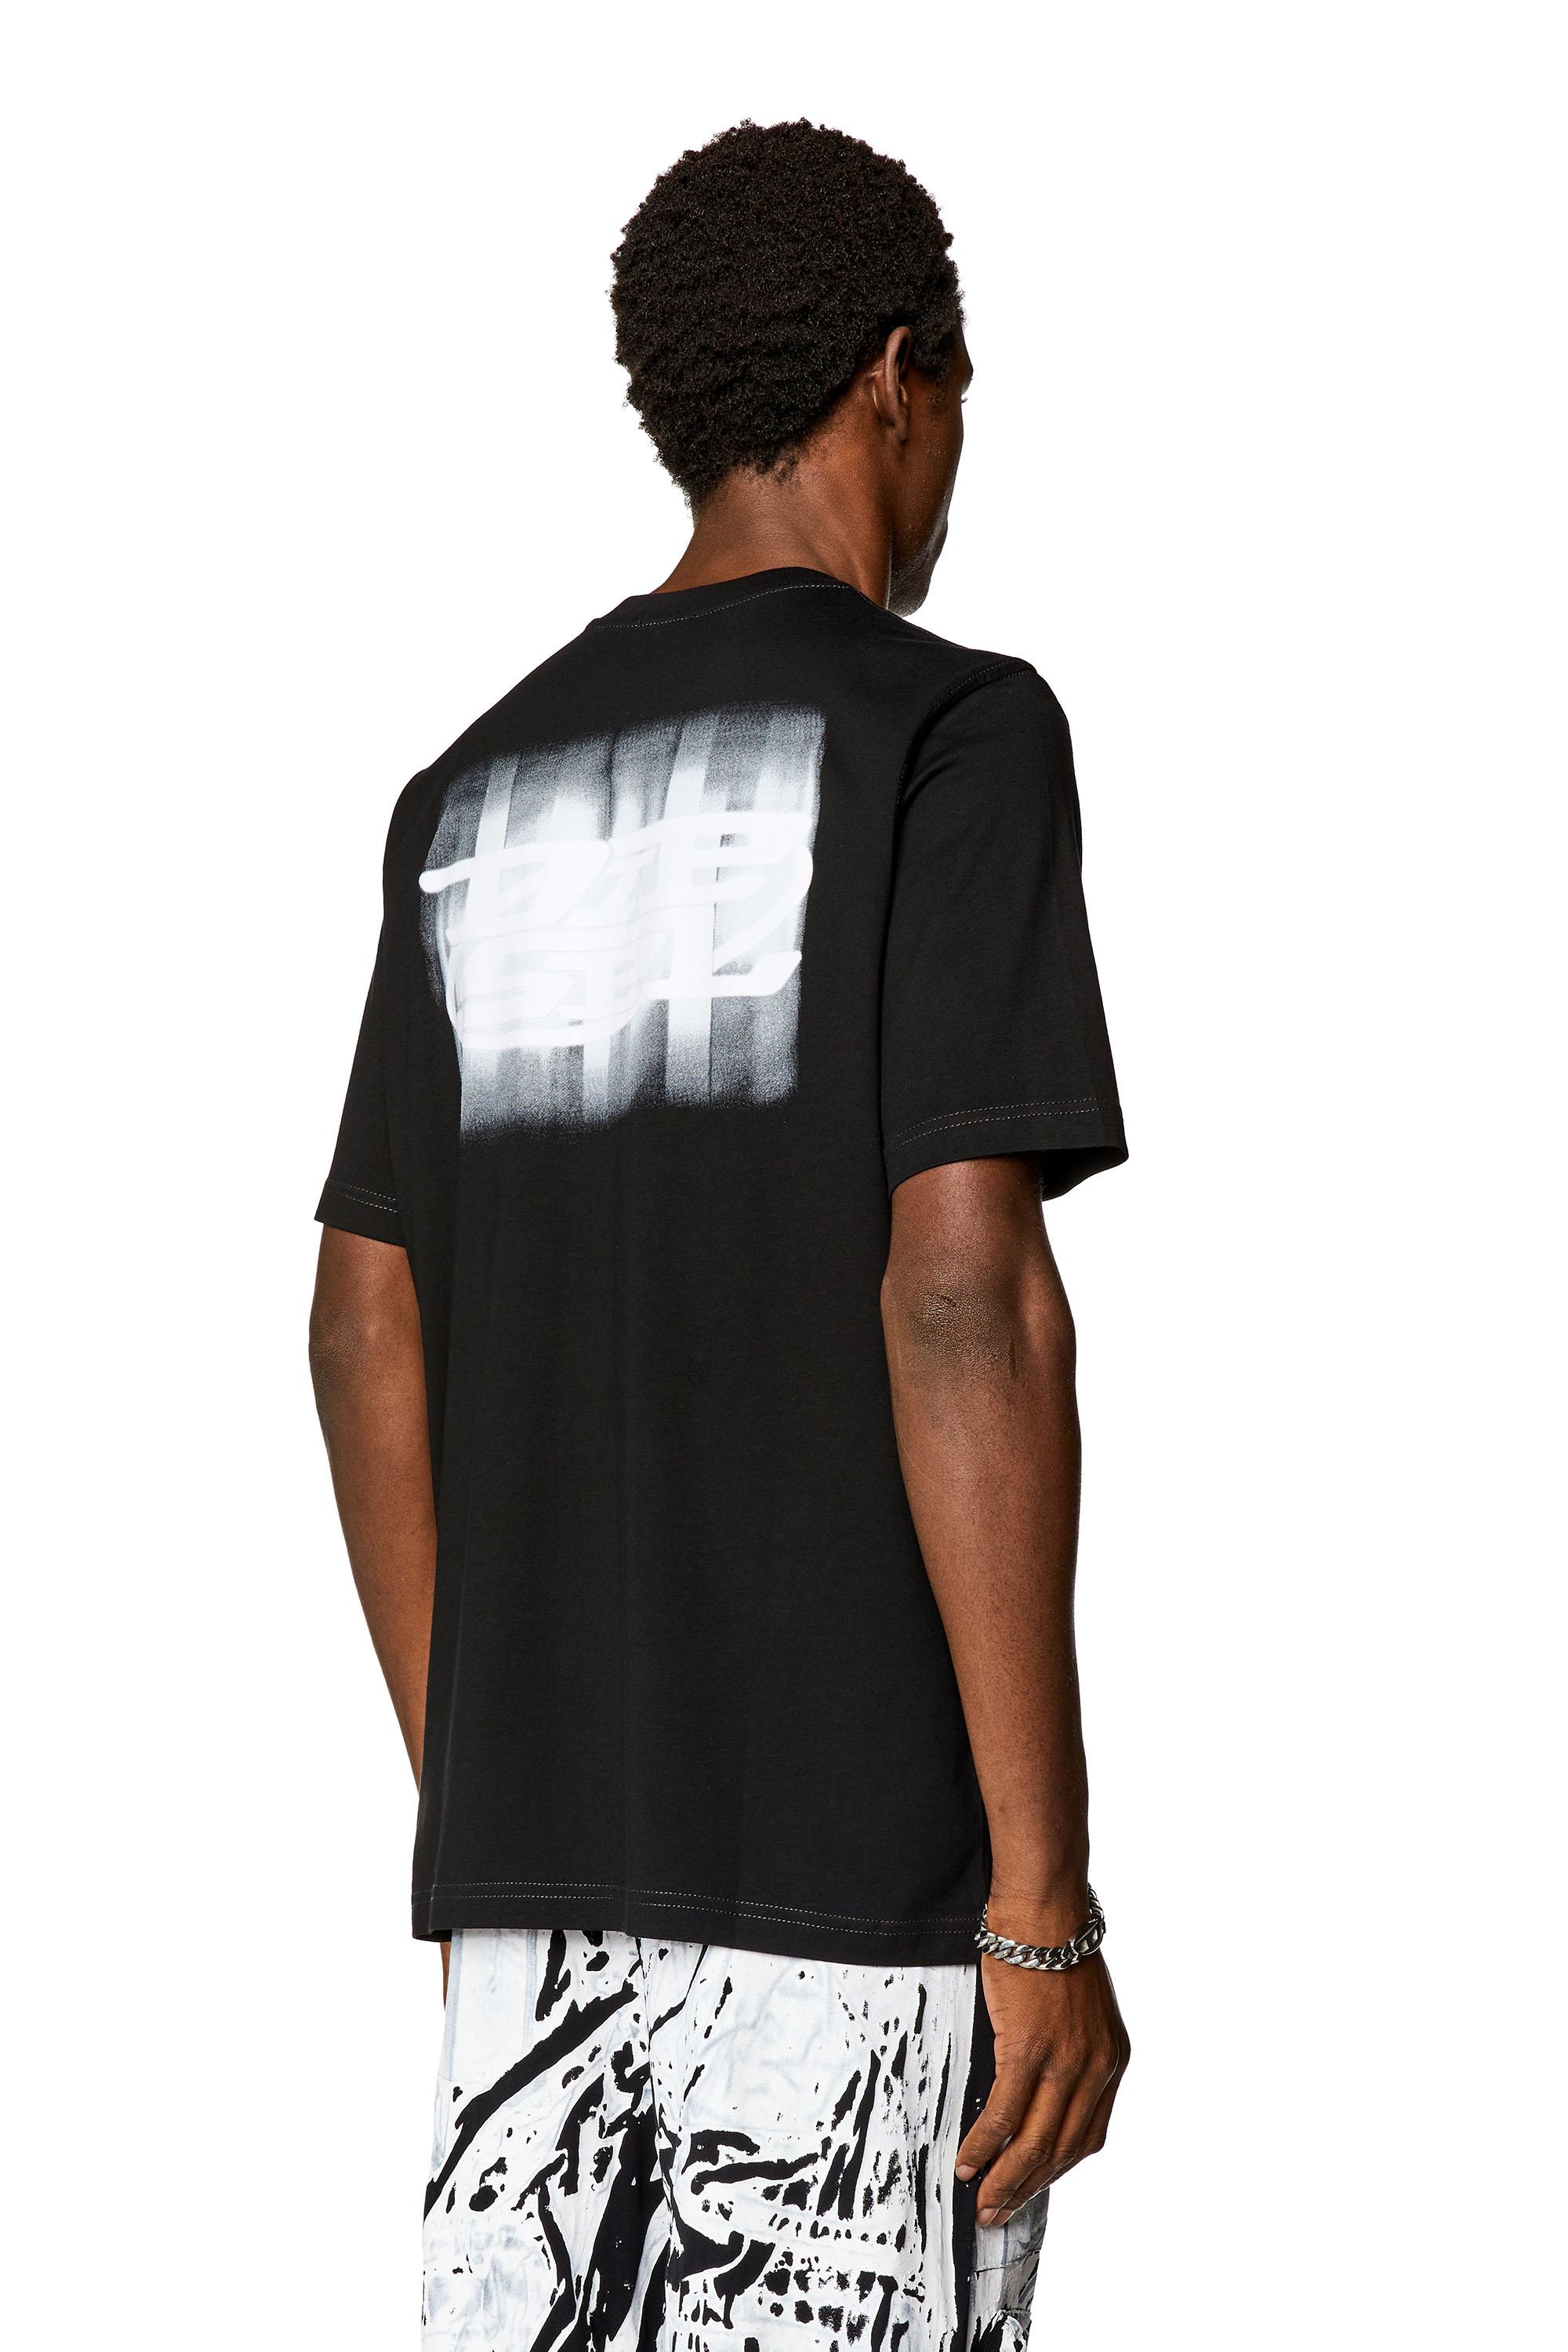 Diesel - T-JUST-N4, Man Logo-flocked T-shirt in organic cotton in Black - Image 4